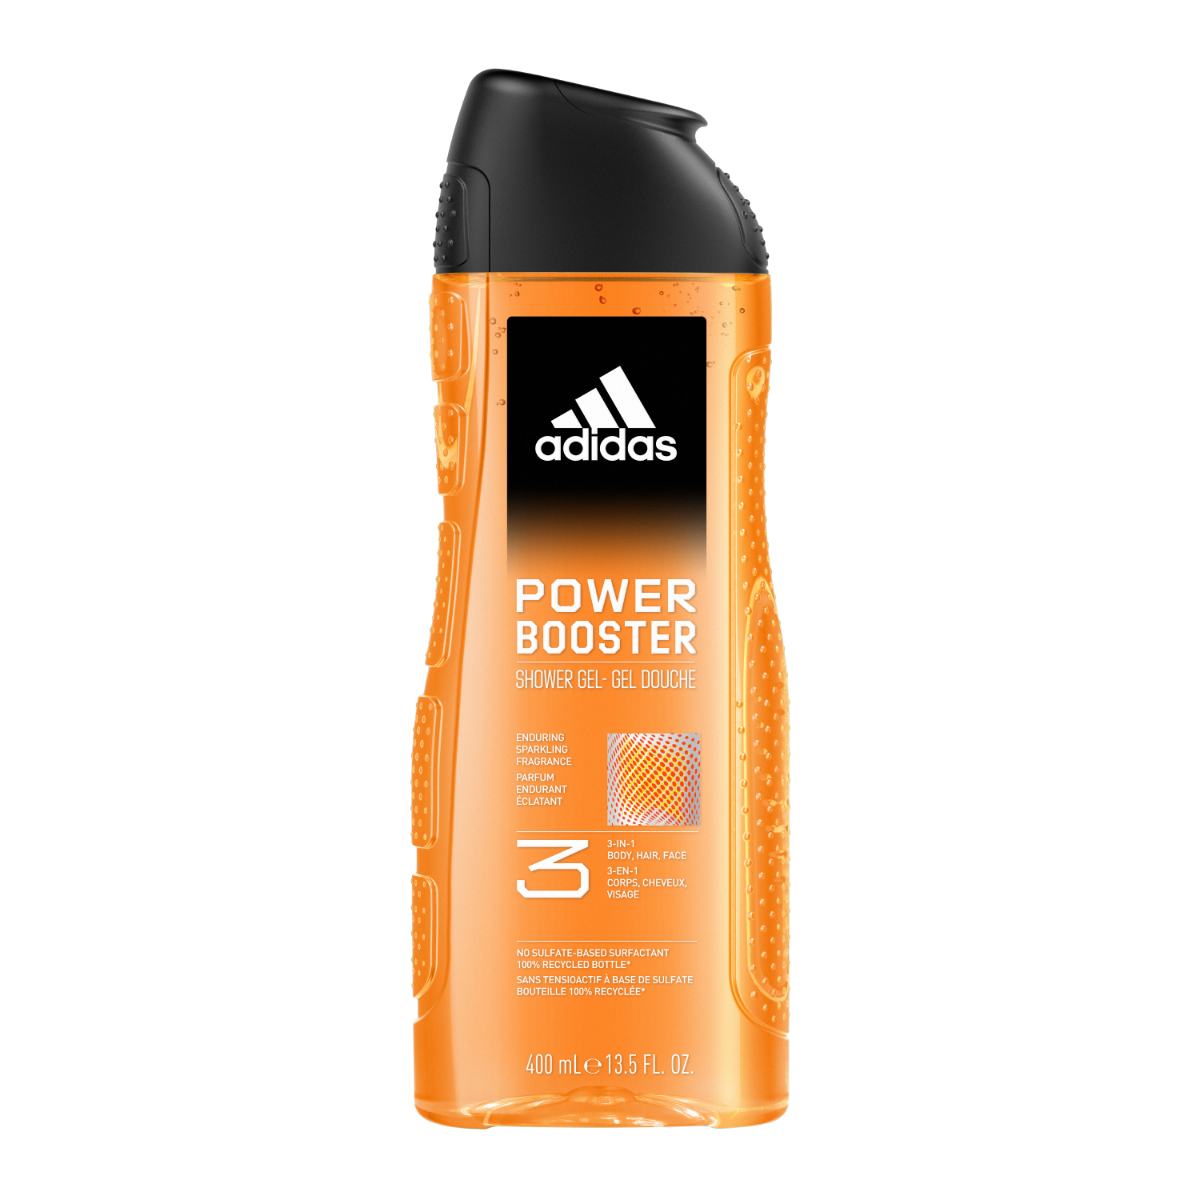 Adidas Power Booster гель для душа, 400 ml